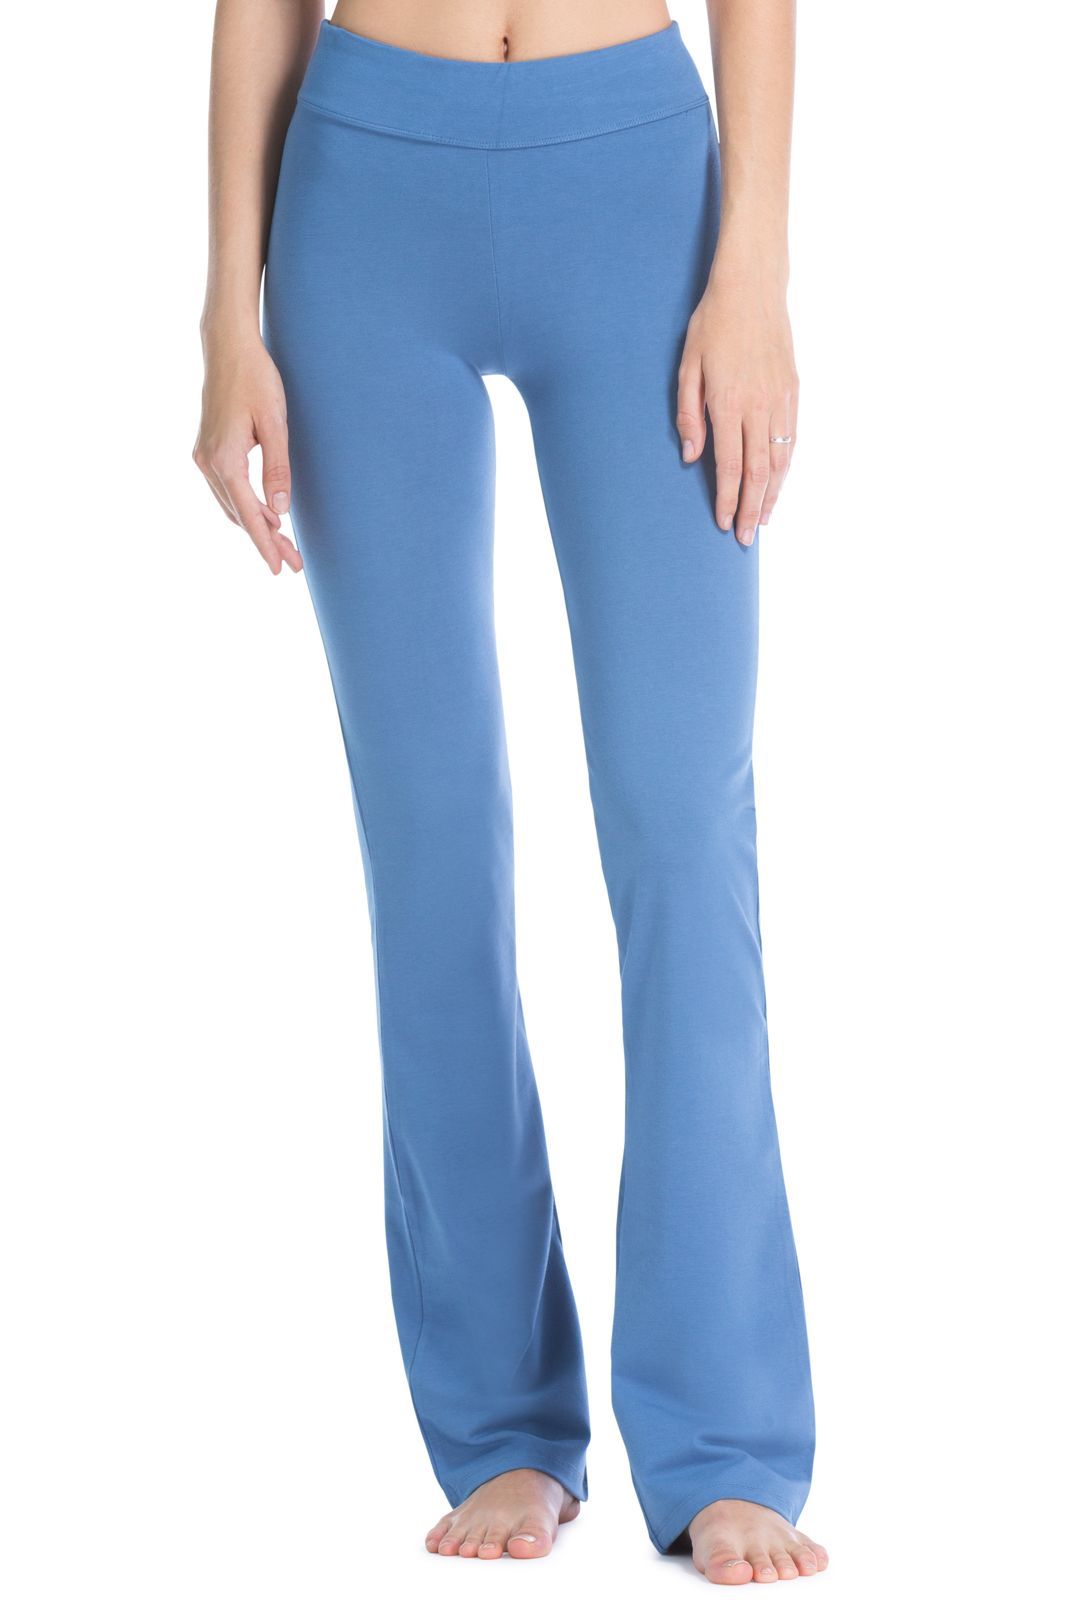 Women's Floral Boot Cut High Waisted Elastic Yoga Pant  Grey yoga pants,  Wide leg yoga pants, Blue yoga pants